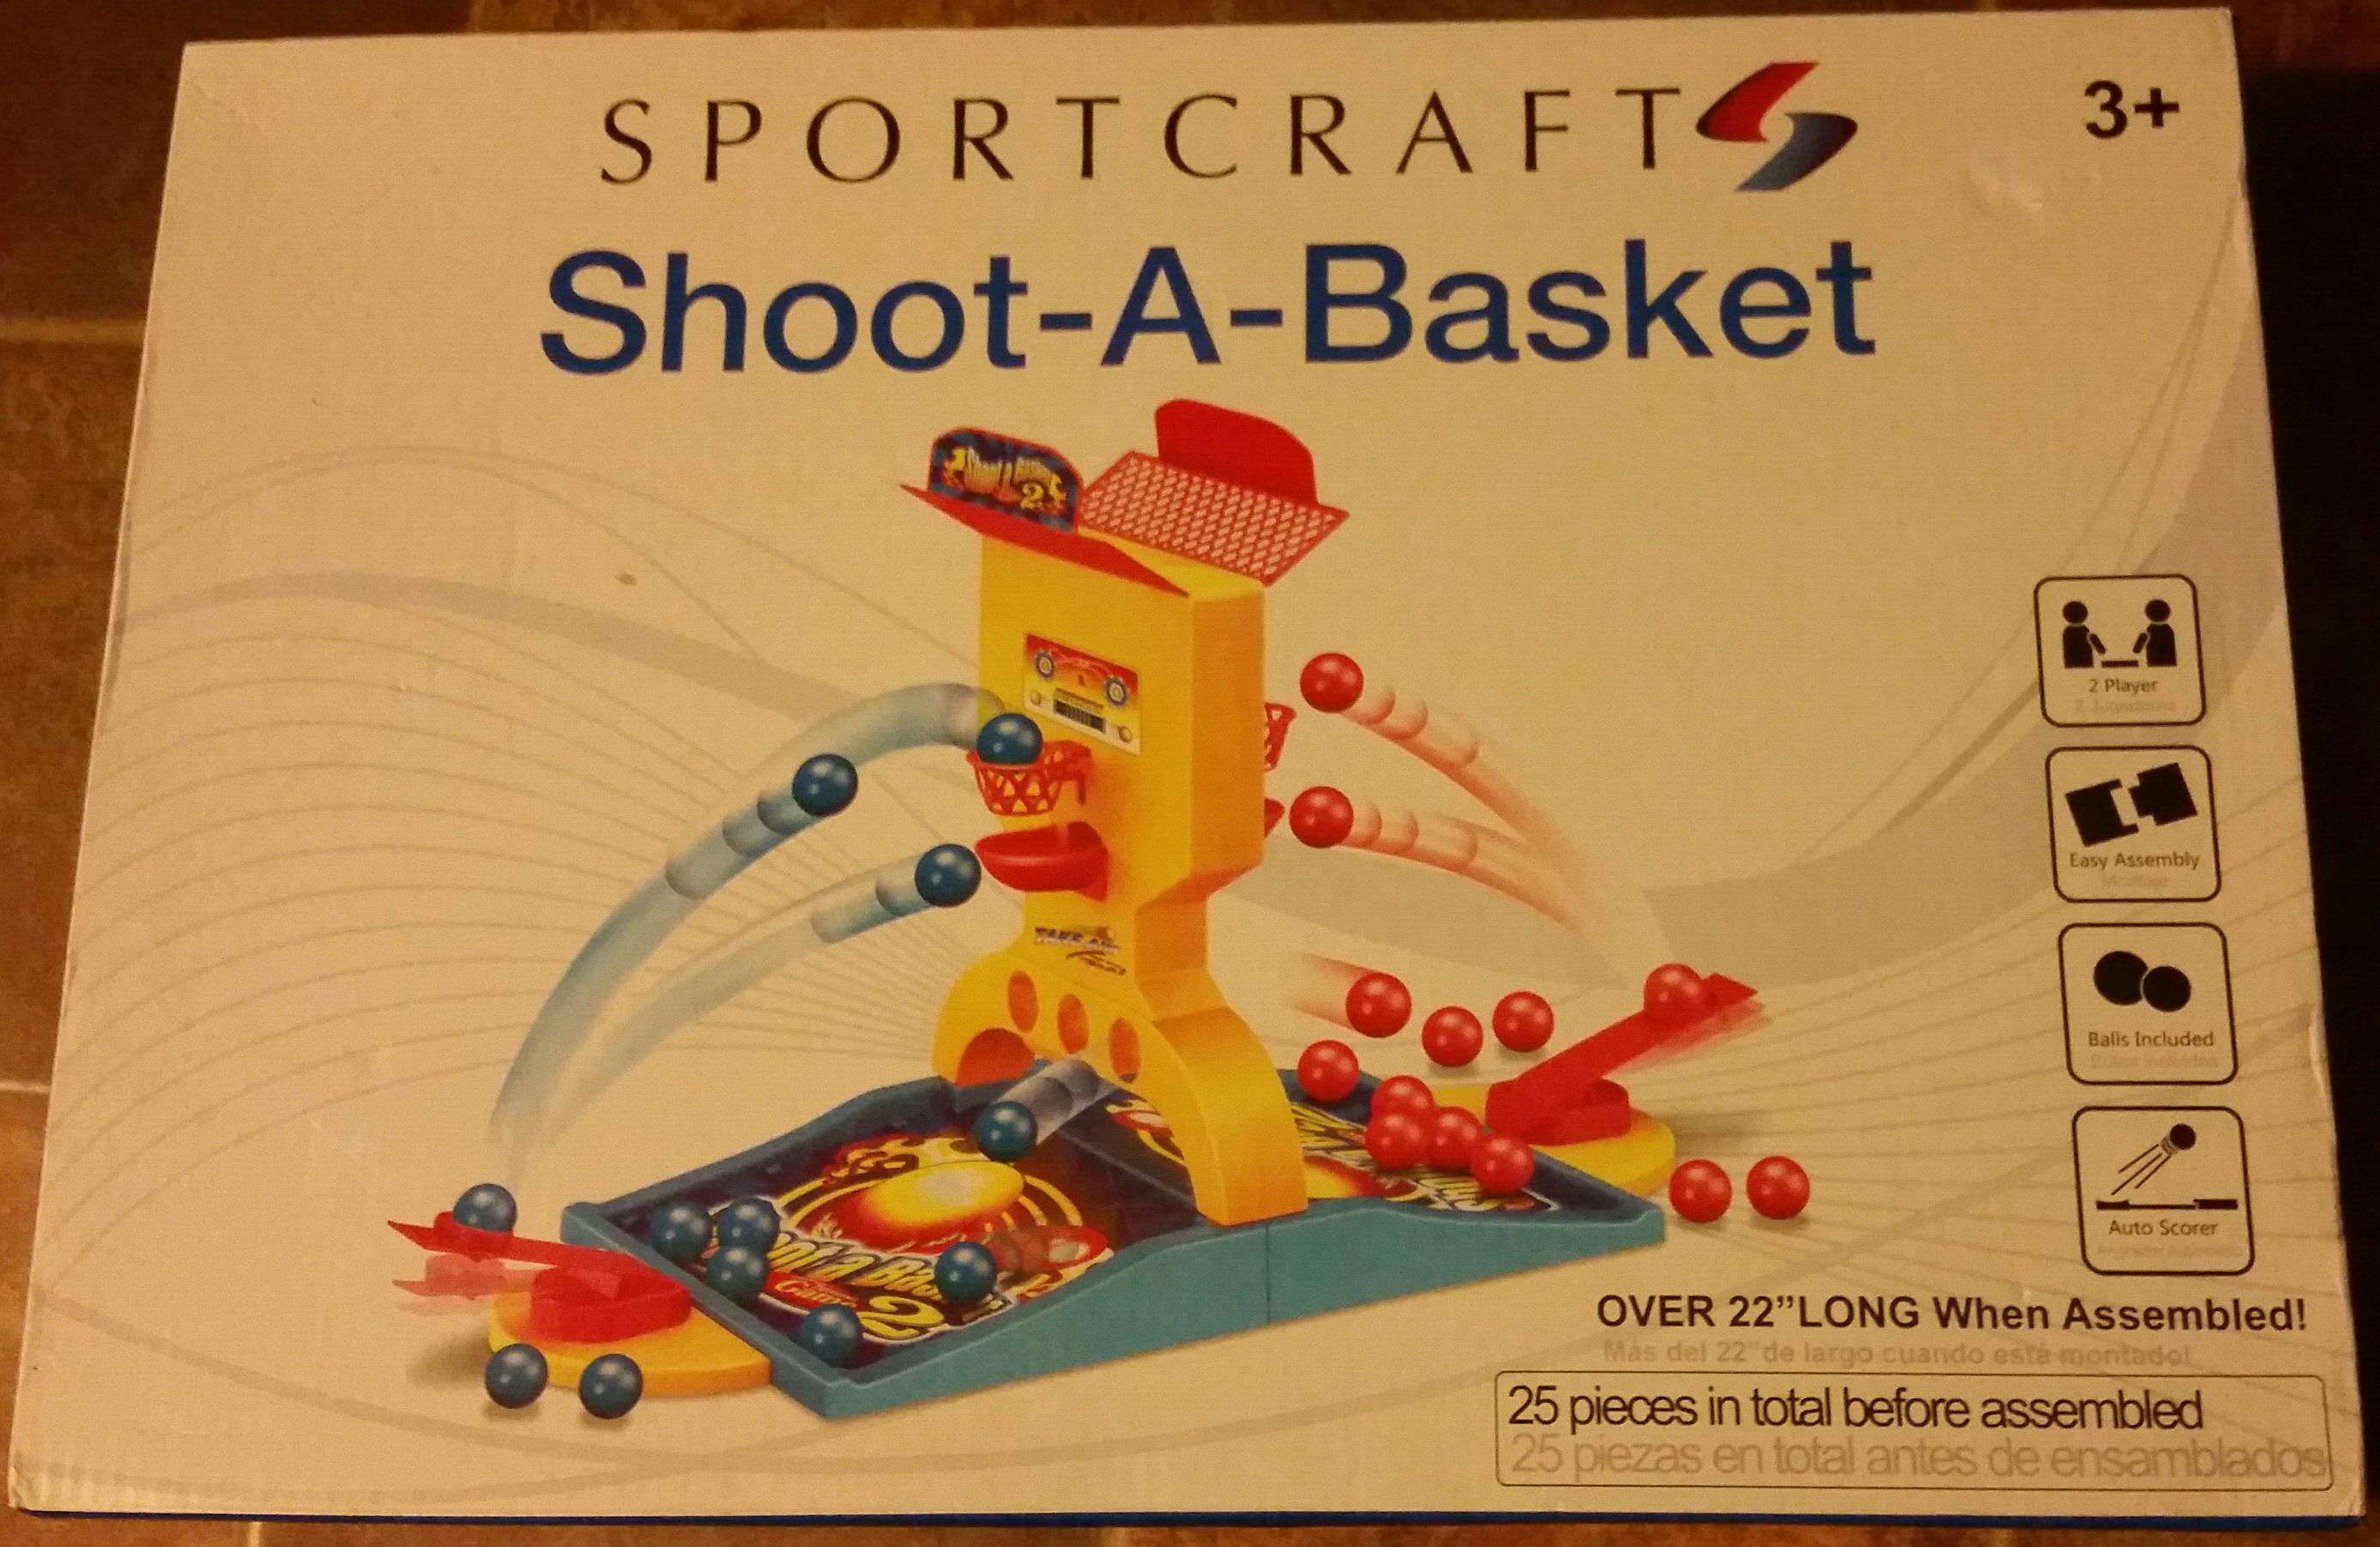 Shoot-A-Basket